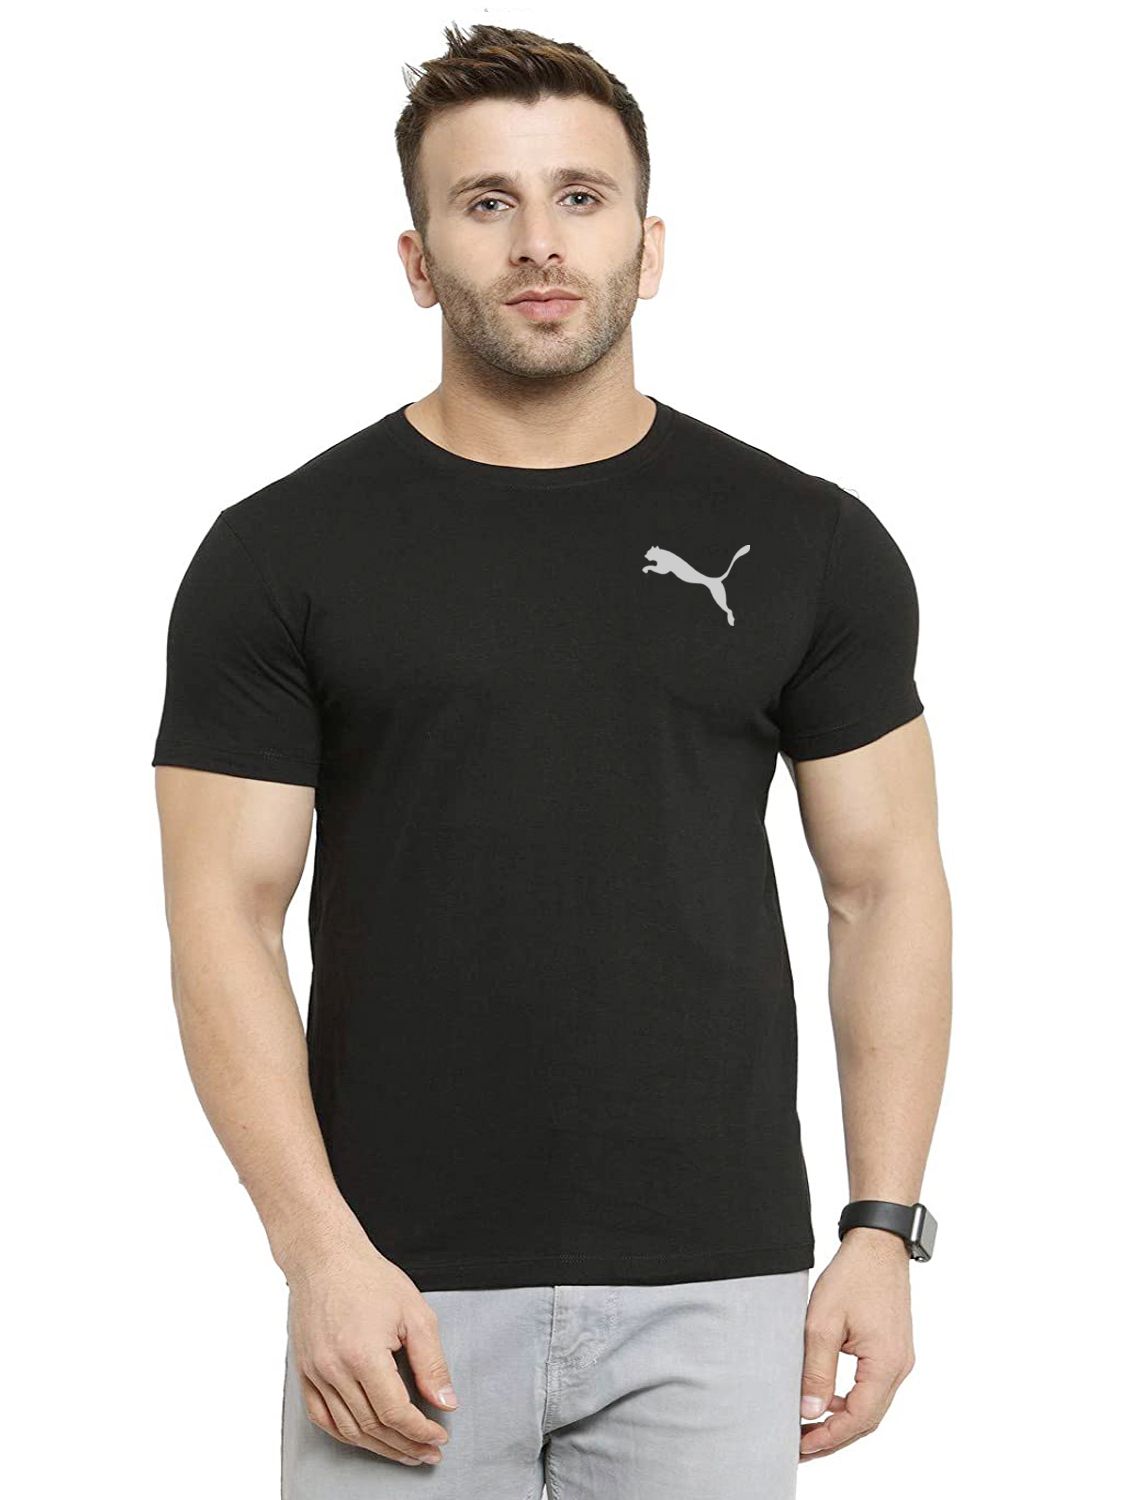 Sydøst lækage Gøre mit bedste Buy Pack of 1 - Best Quality Branded T-shirt for Men/Boys at Lowest Price  in Pakistan | Oshi.pk